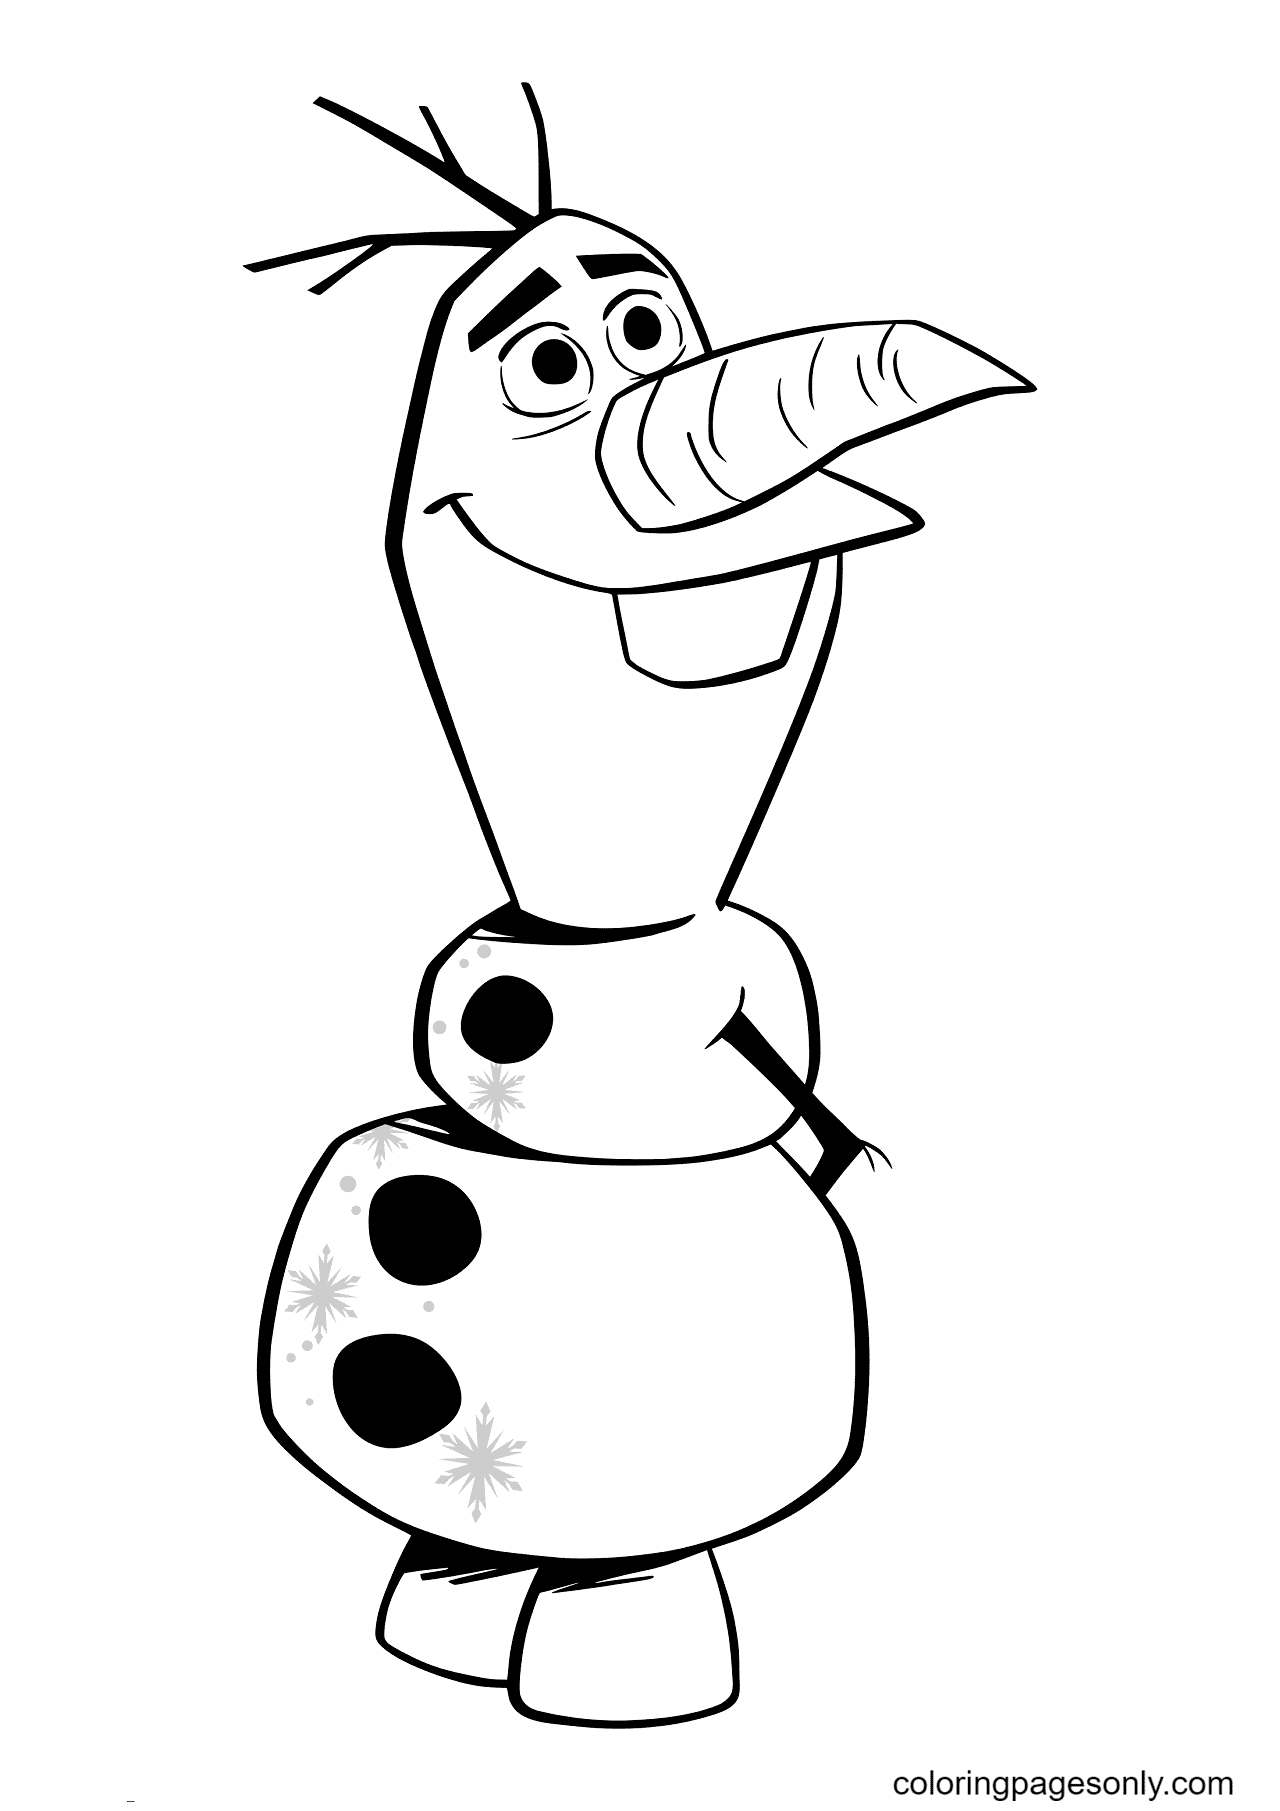 Disney Frozen Olaf de Olaf